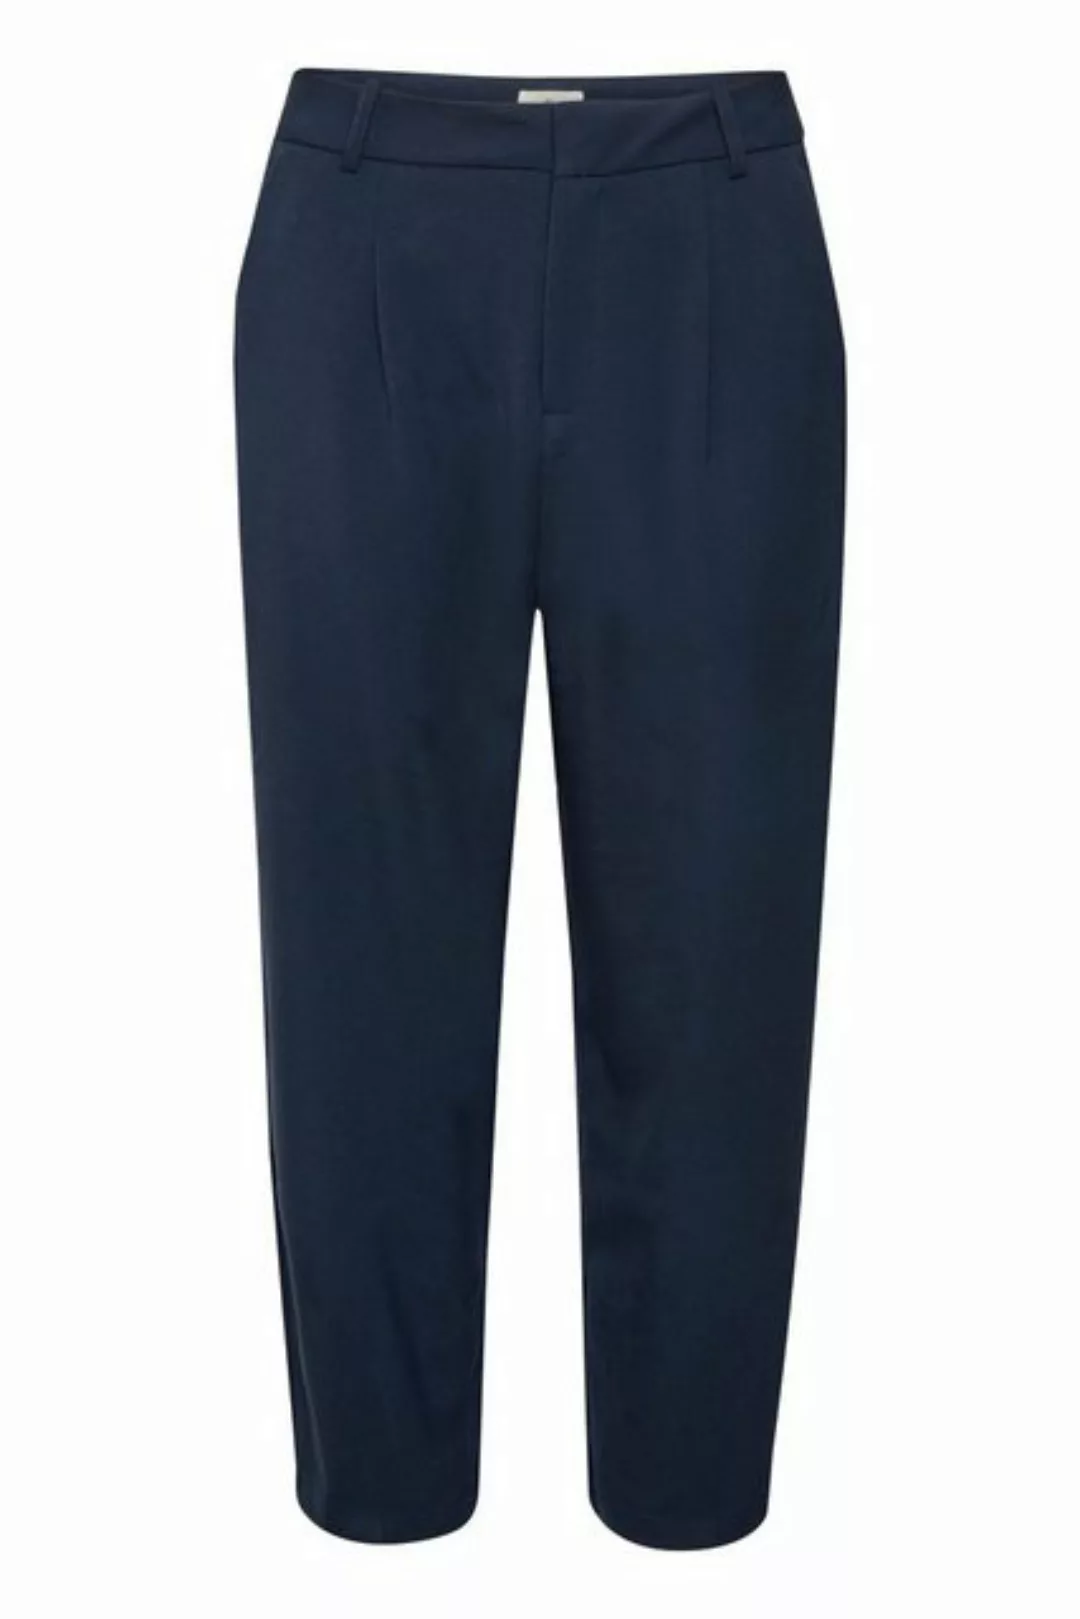 KAFFE Anzughose Pants Suiting KAmerle günstig online kaufen